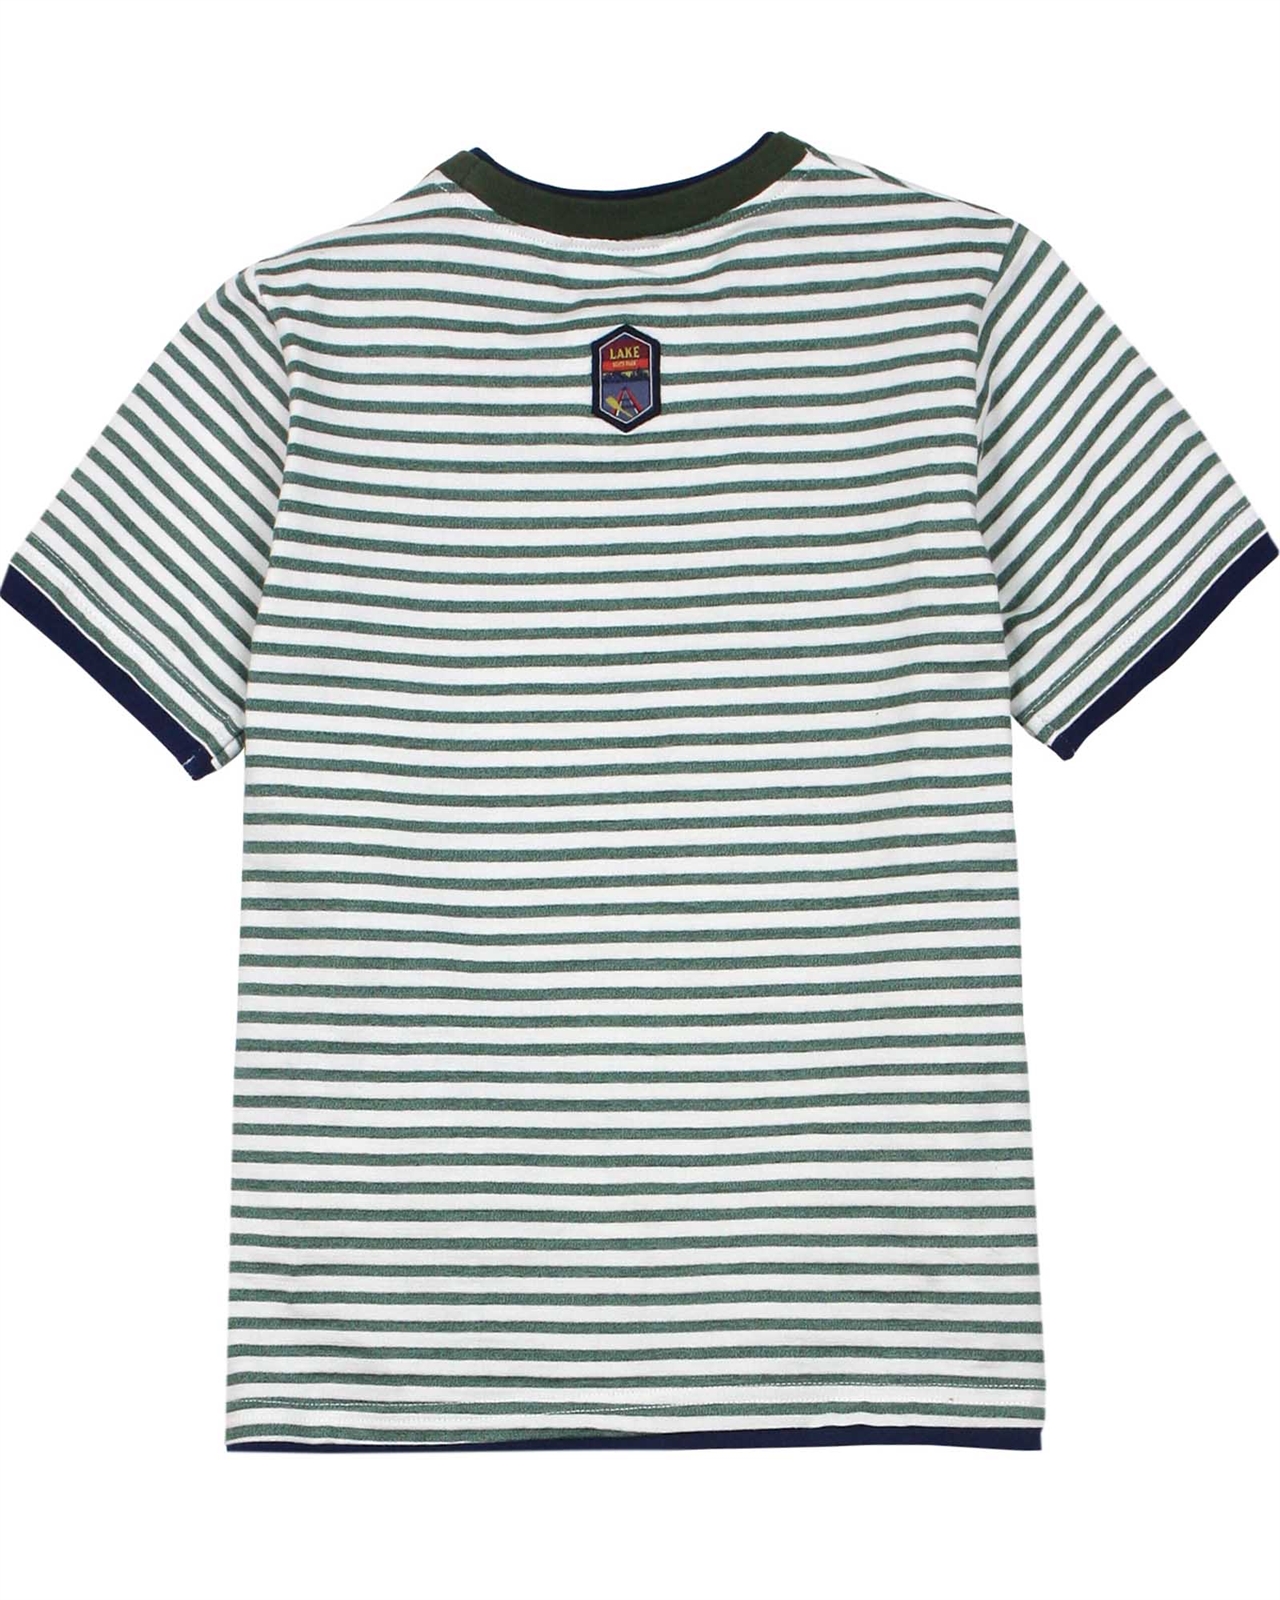 Nano Boys Striped T-shirt with Print - Nano Clothing - Nano Spring ...